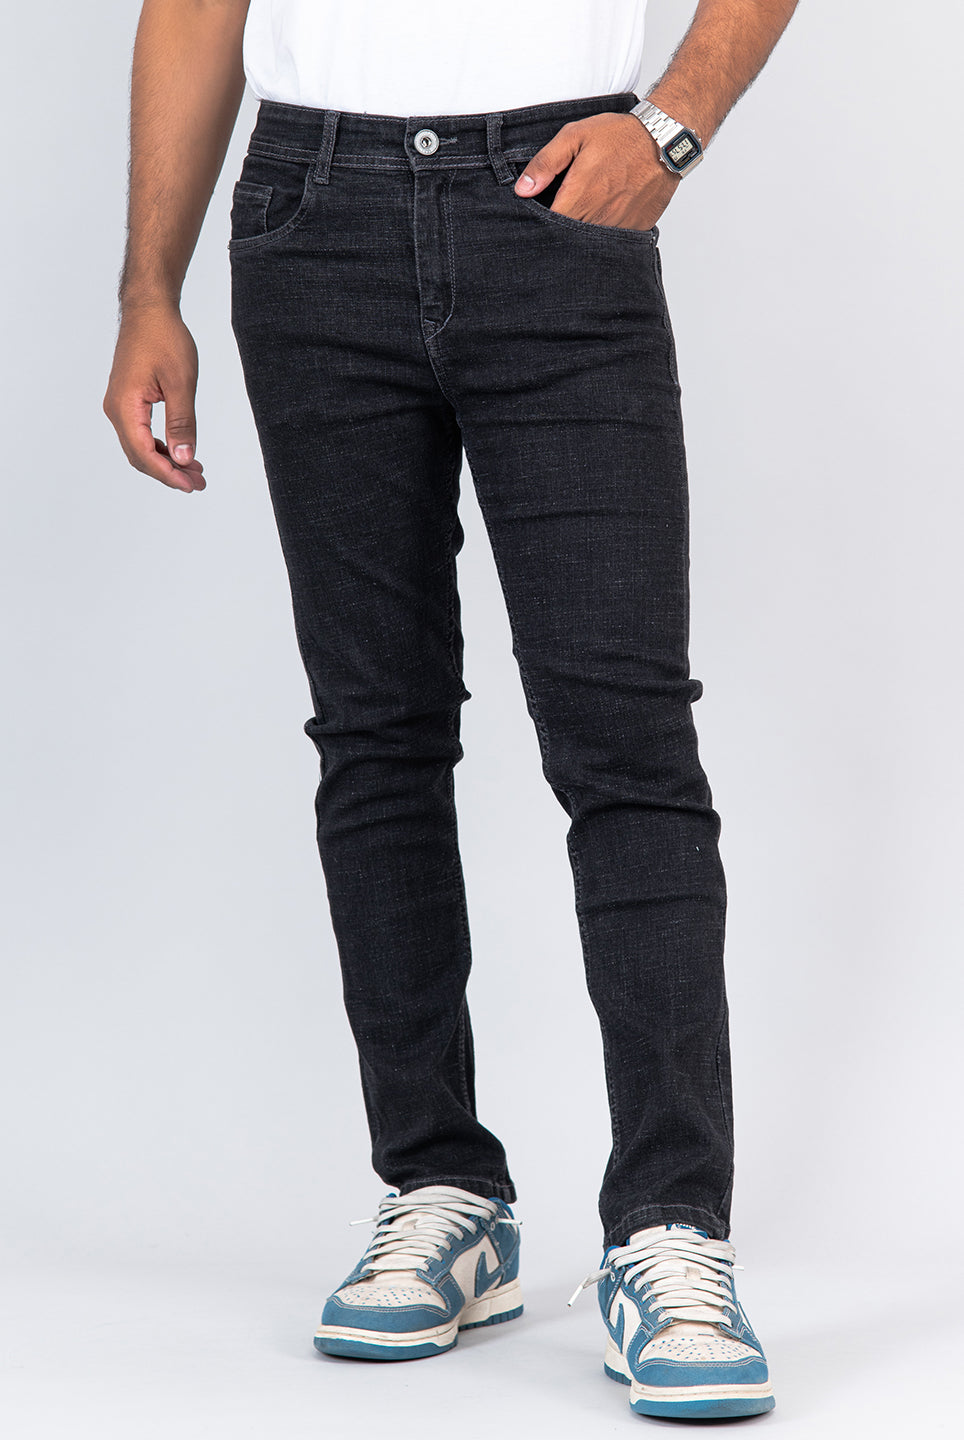 black slim fit denim jeans